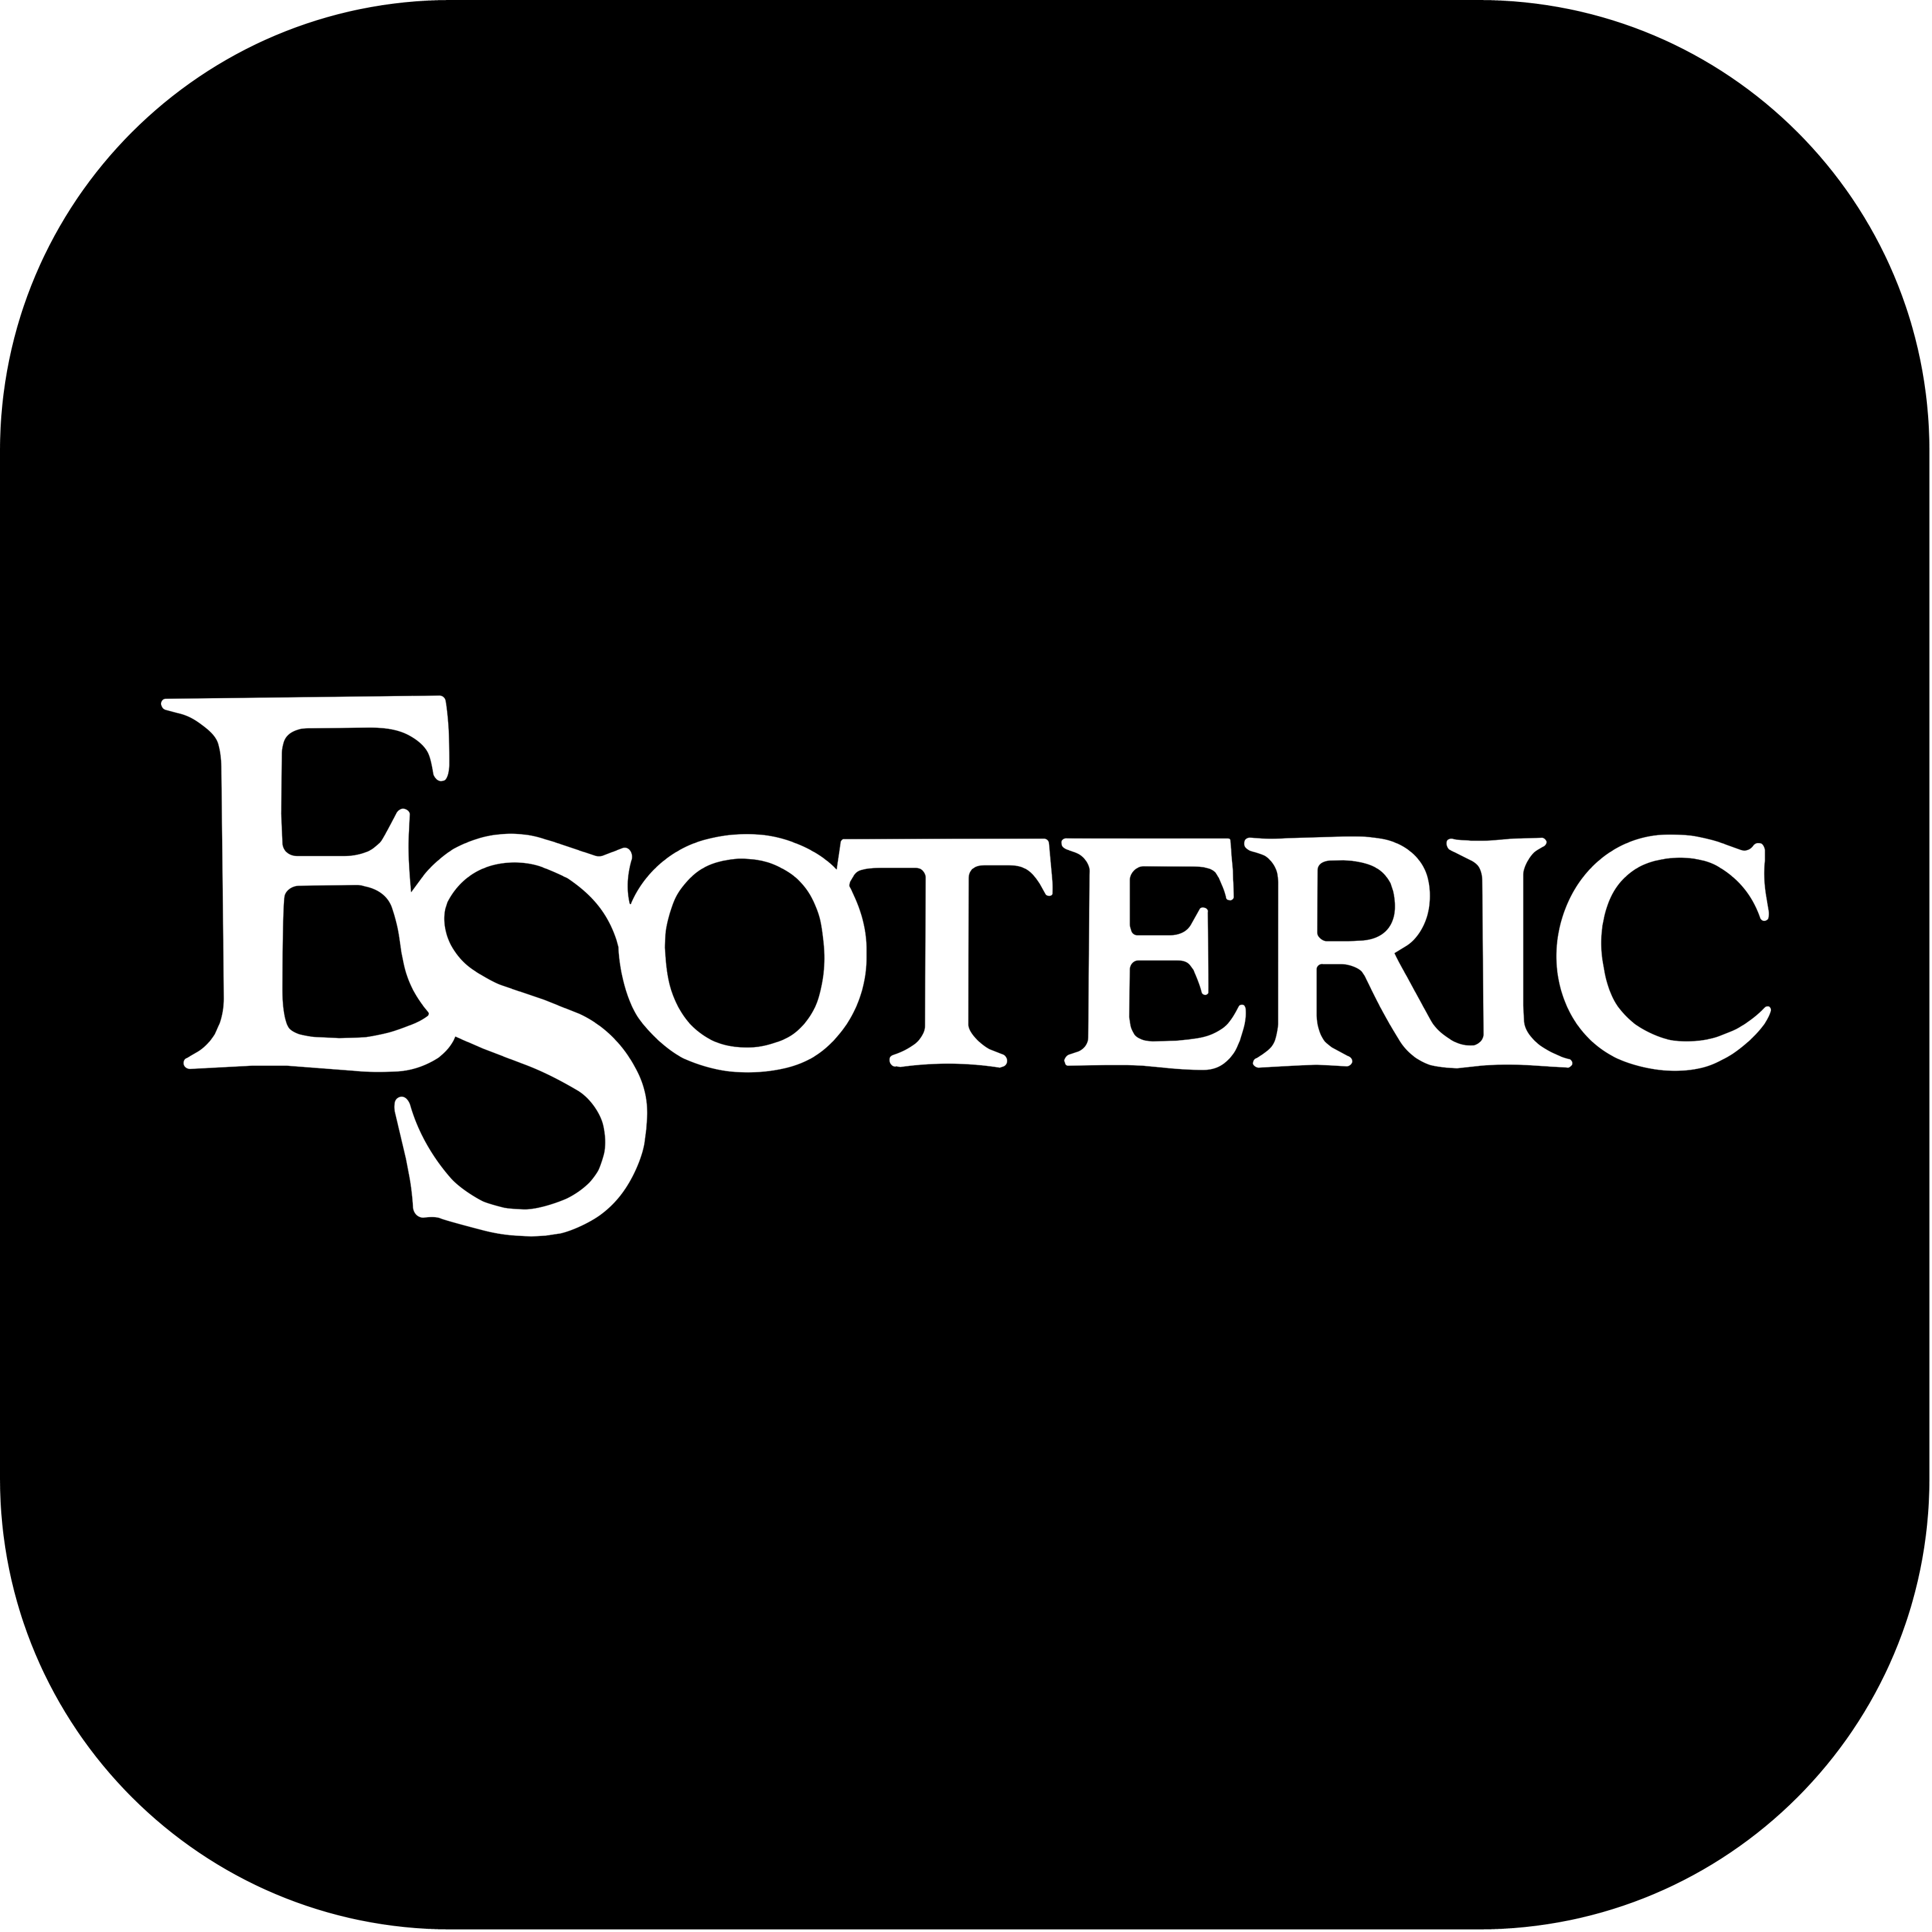 Esoteric Logo Transparent Picture